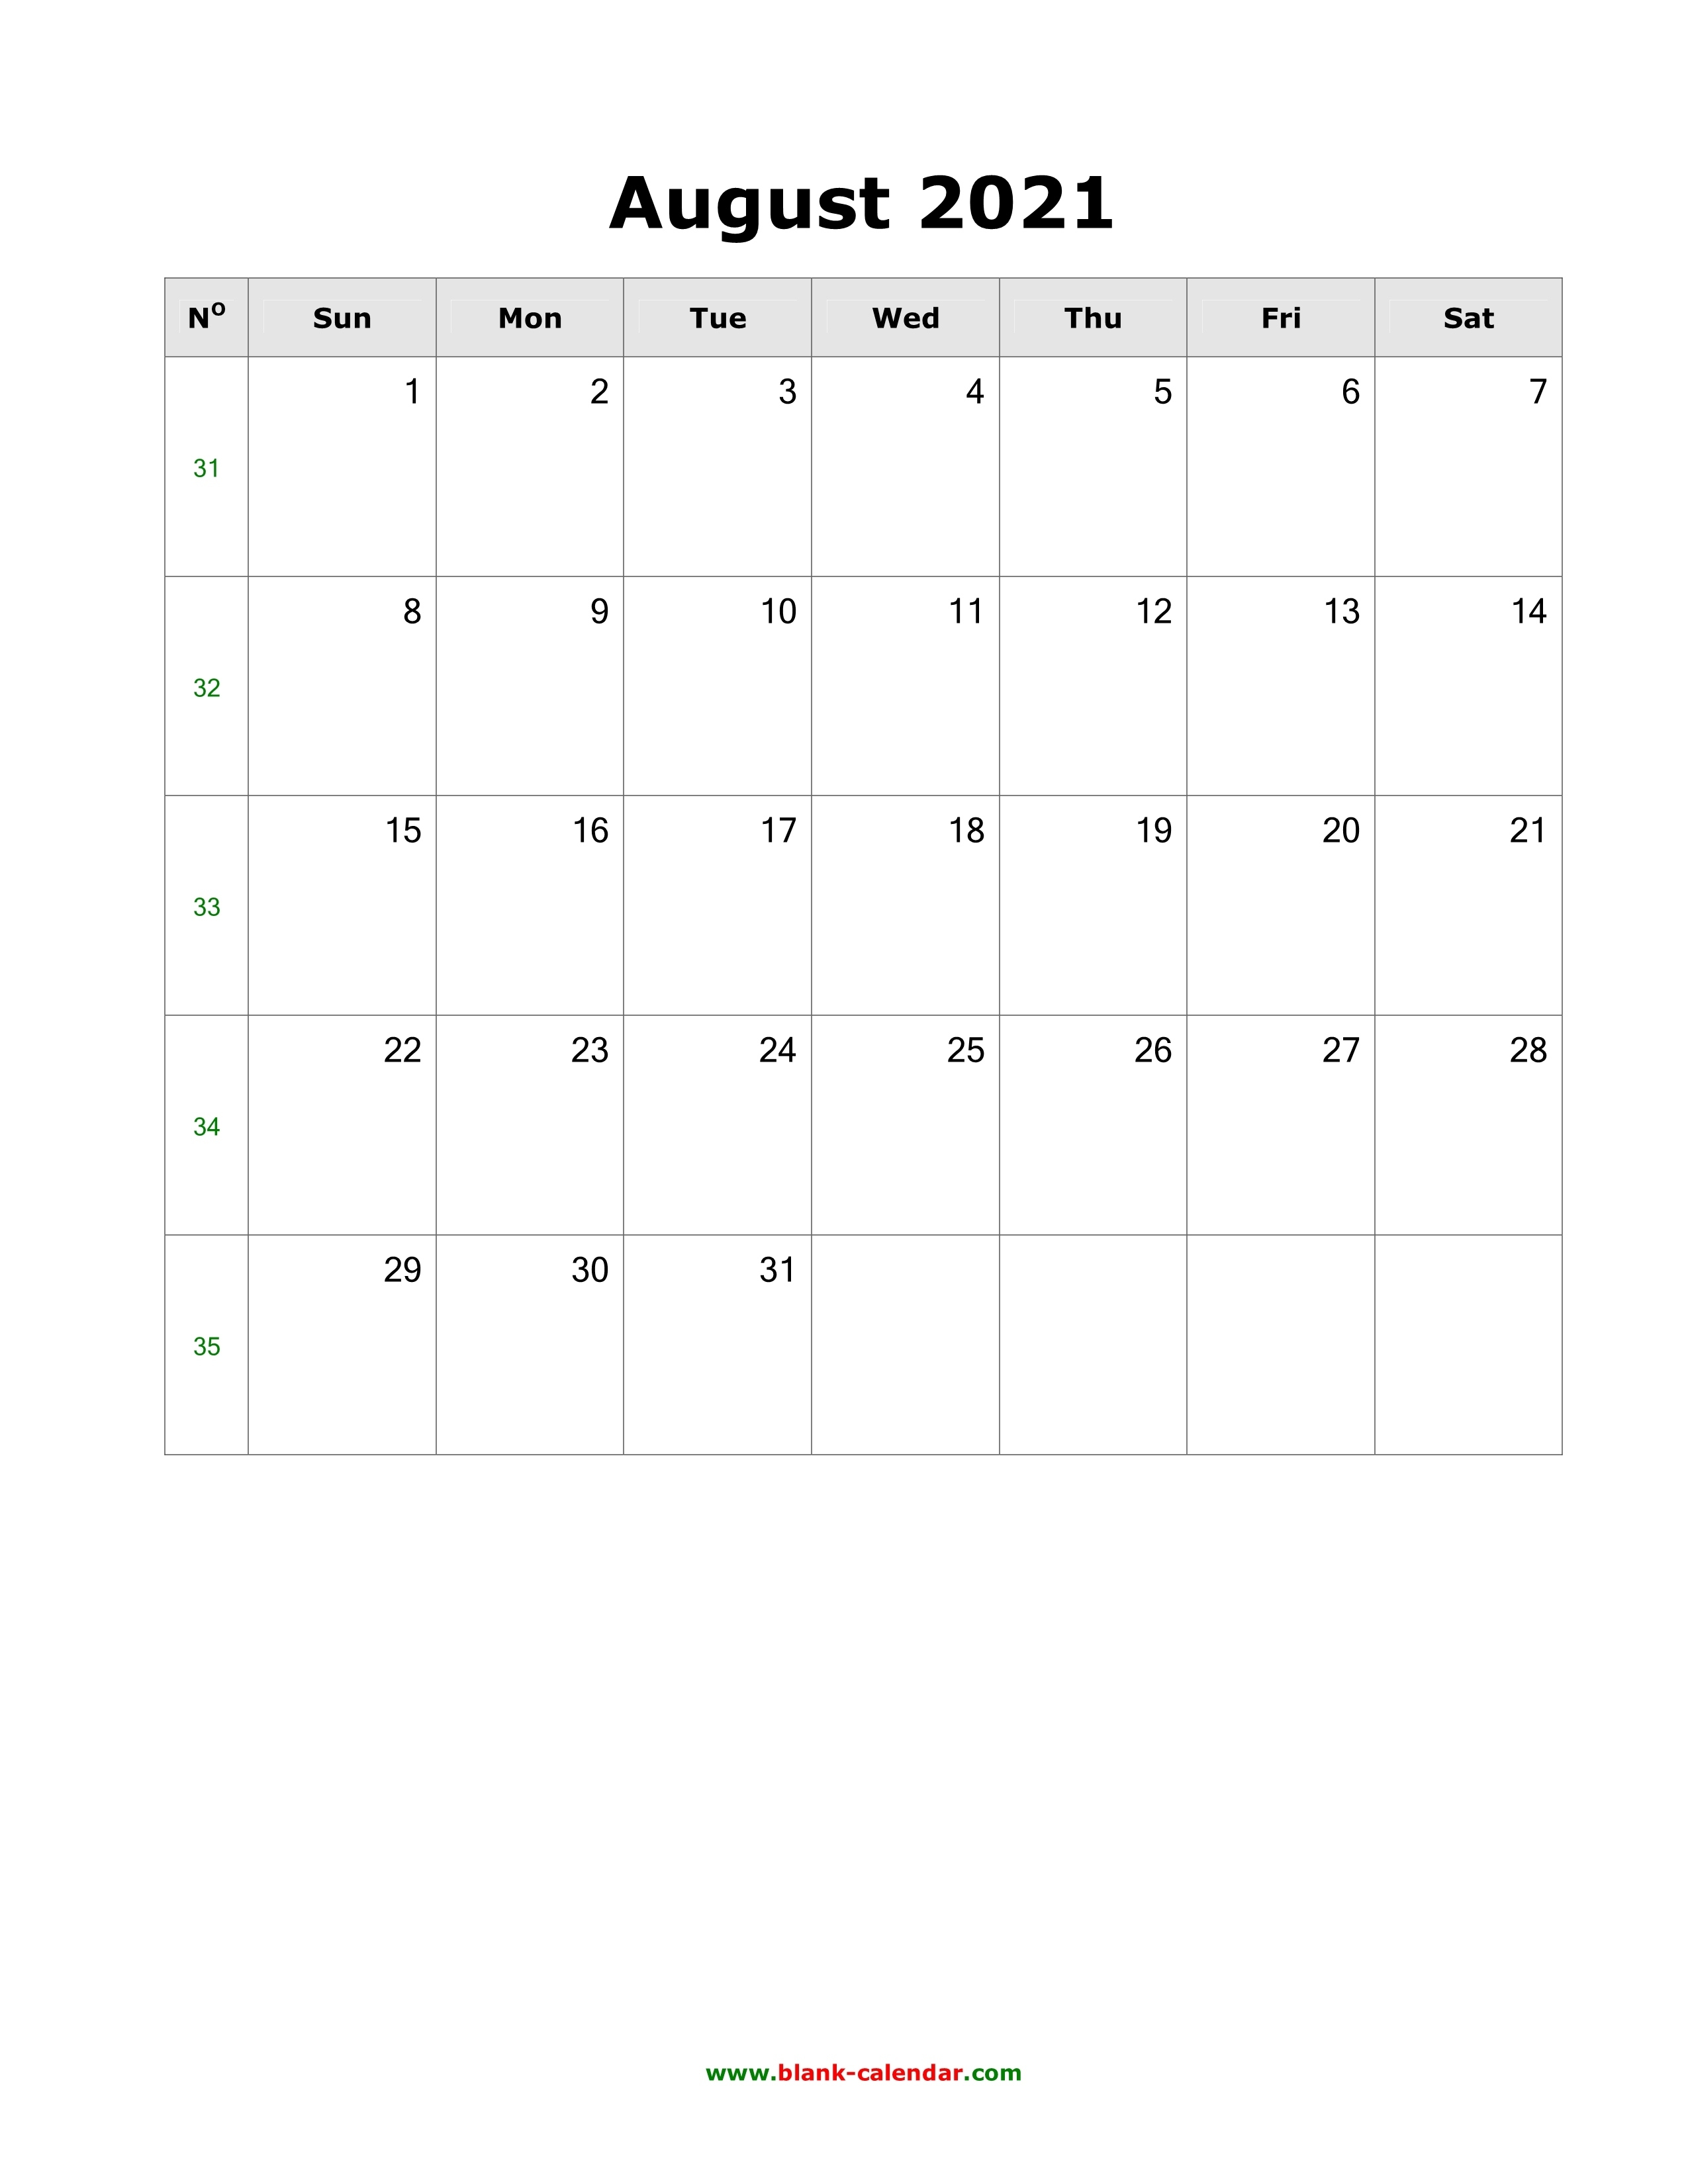 August 2021 Calendar Us - Holiday Calendar August 2021 Calendar Hindi